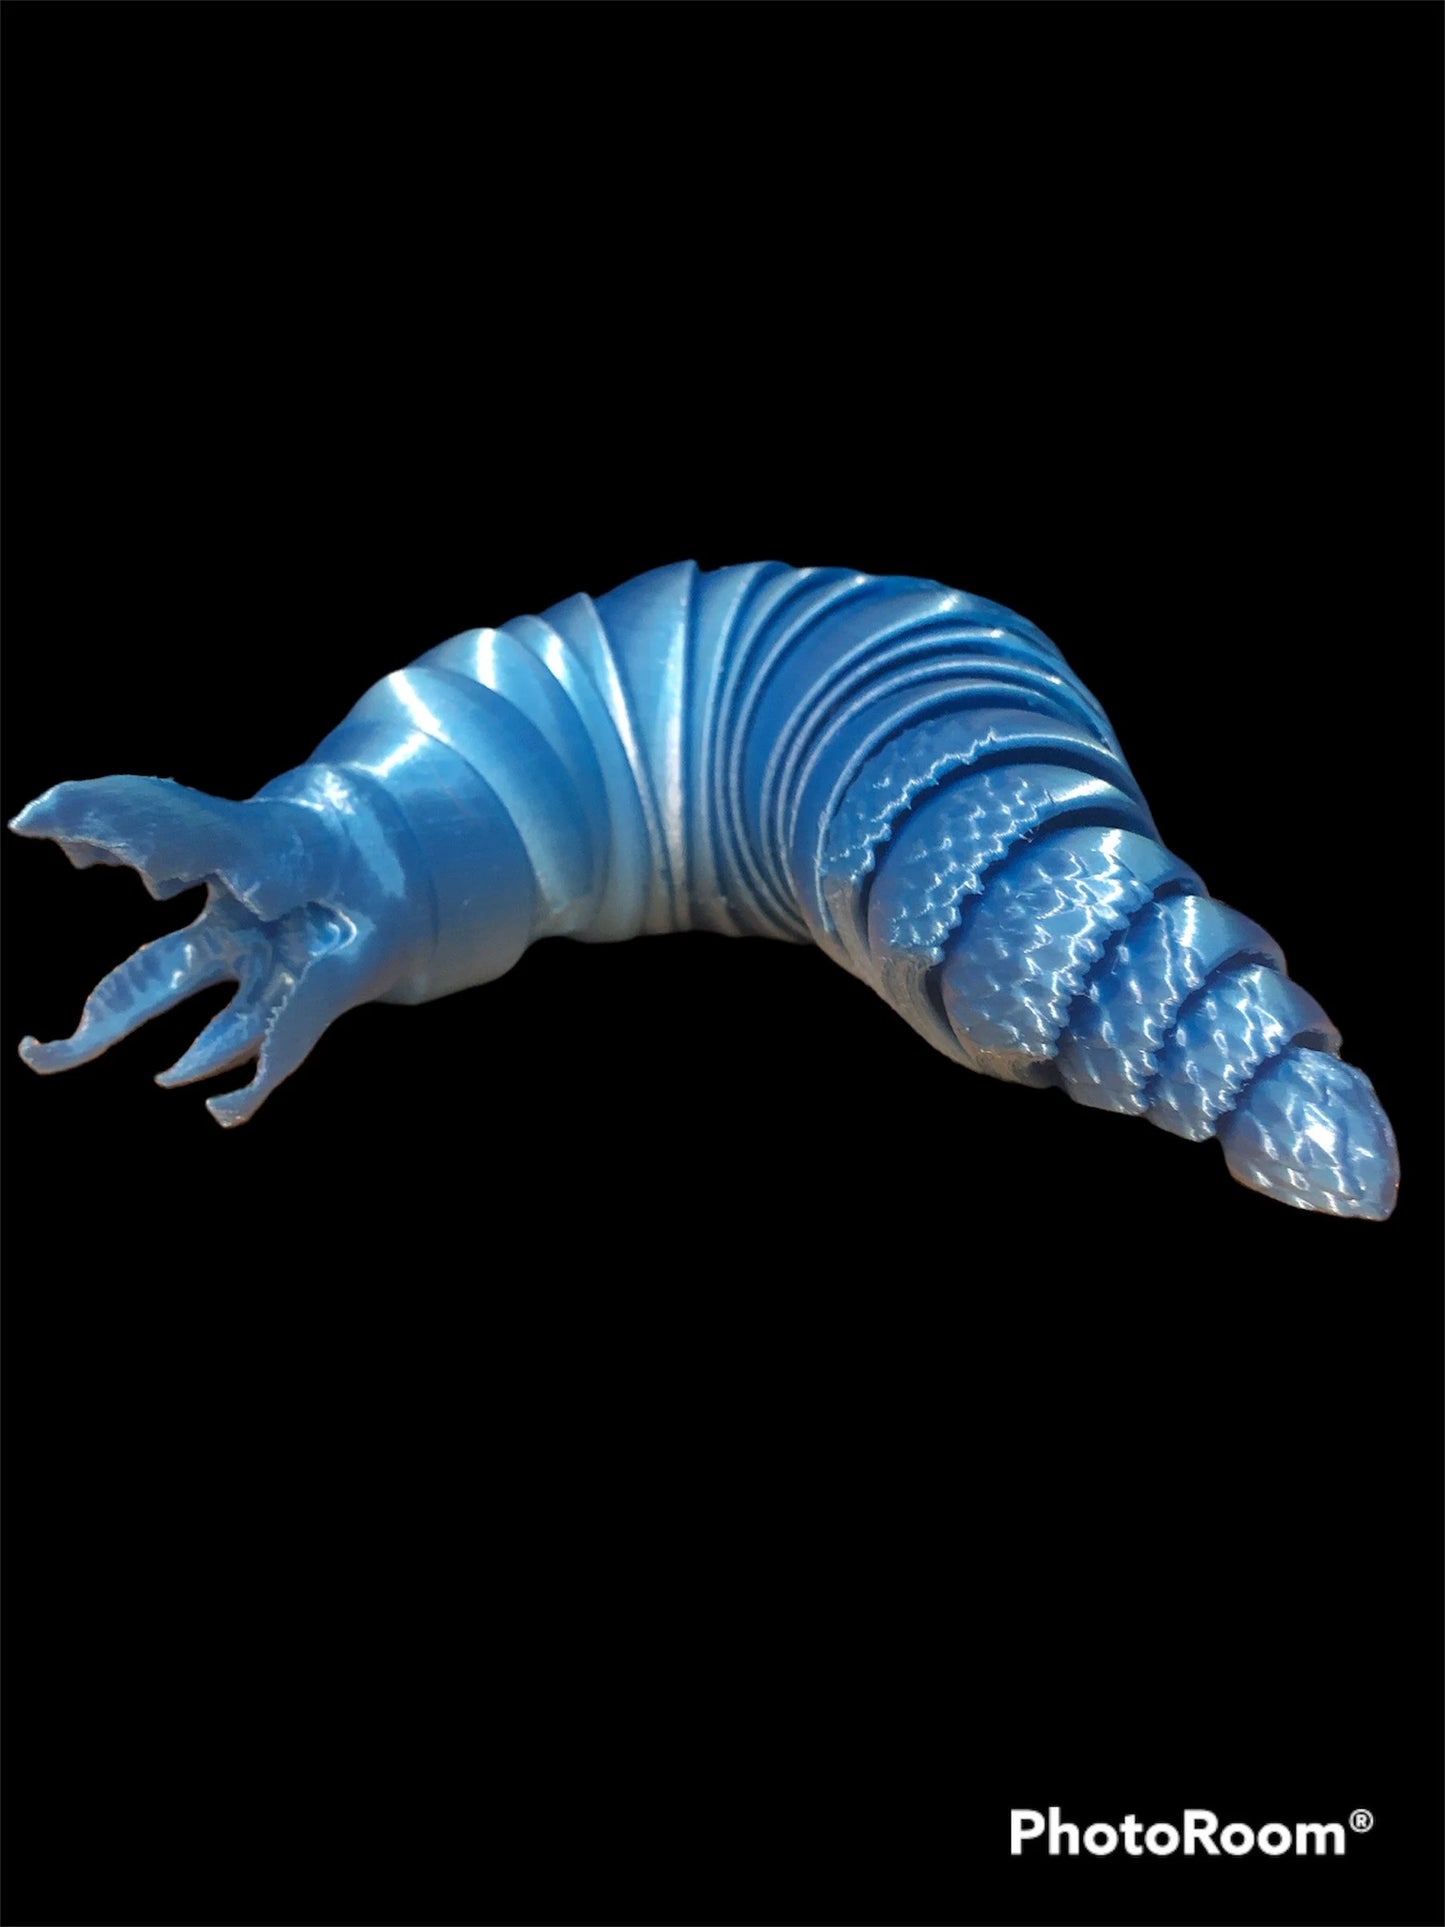 Dirt Dragon Graboid Articulated Slug 3D Printed. A Make it Michael Original Model!